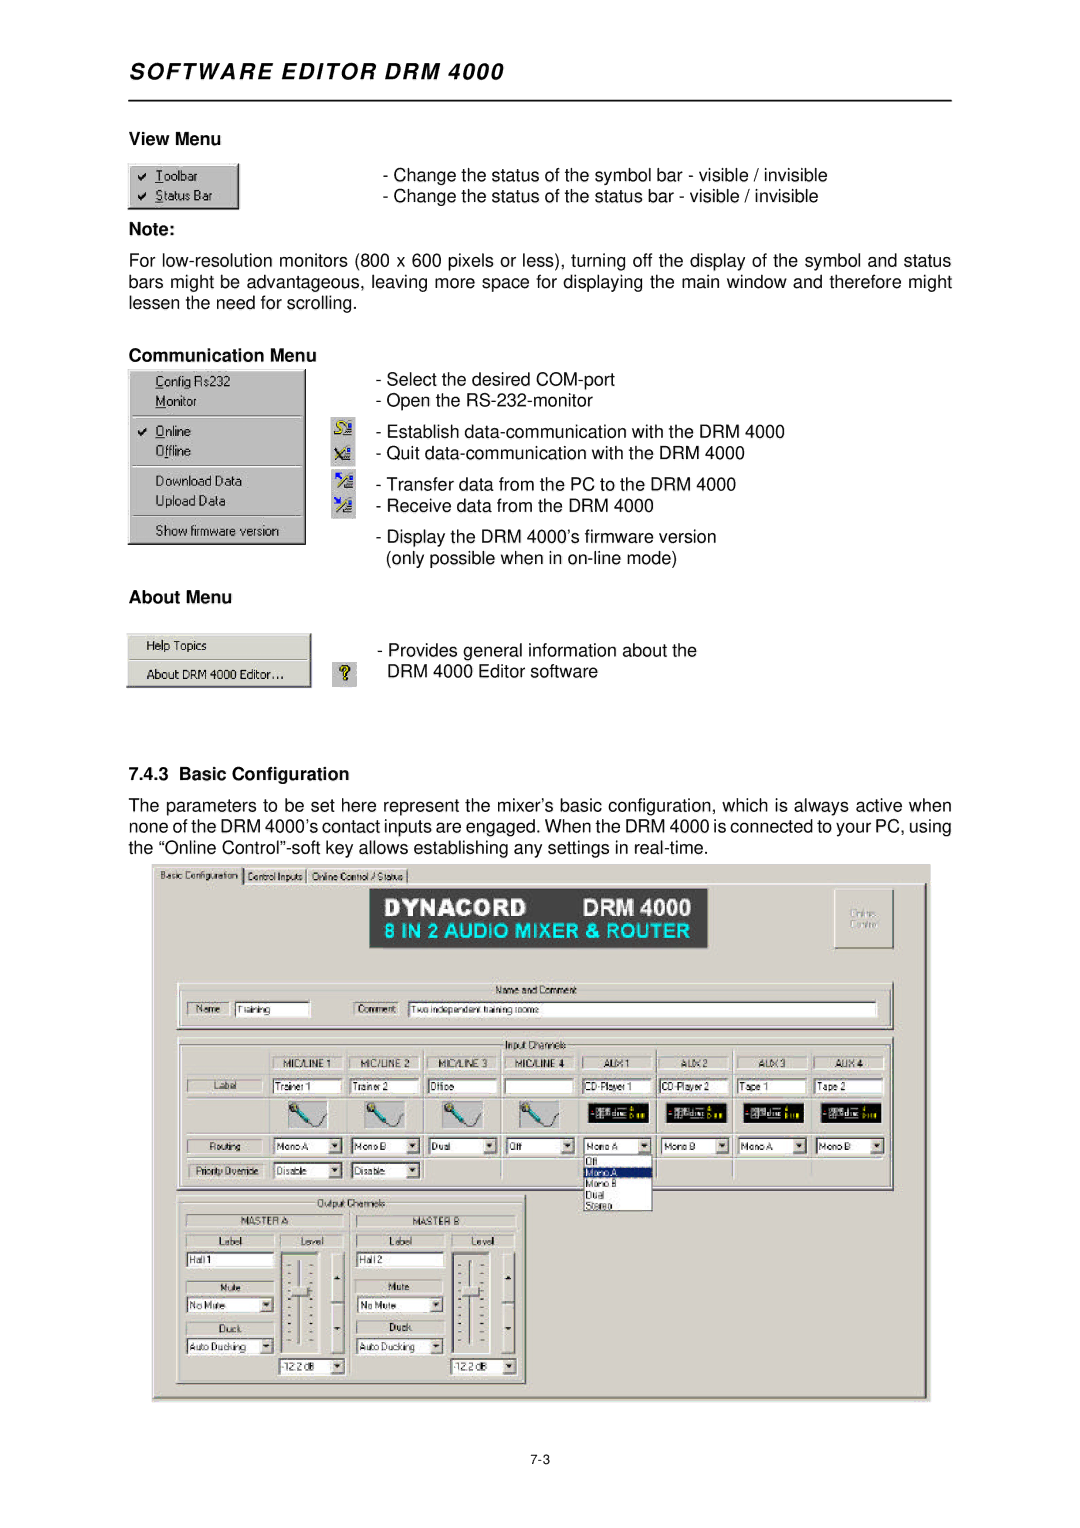 Dynacord DRM 4000 owner manual View Menu, Communication Menu, About Menu, Basic Configuration 